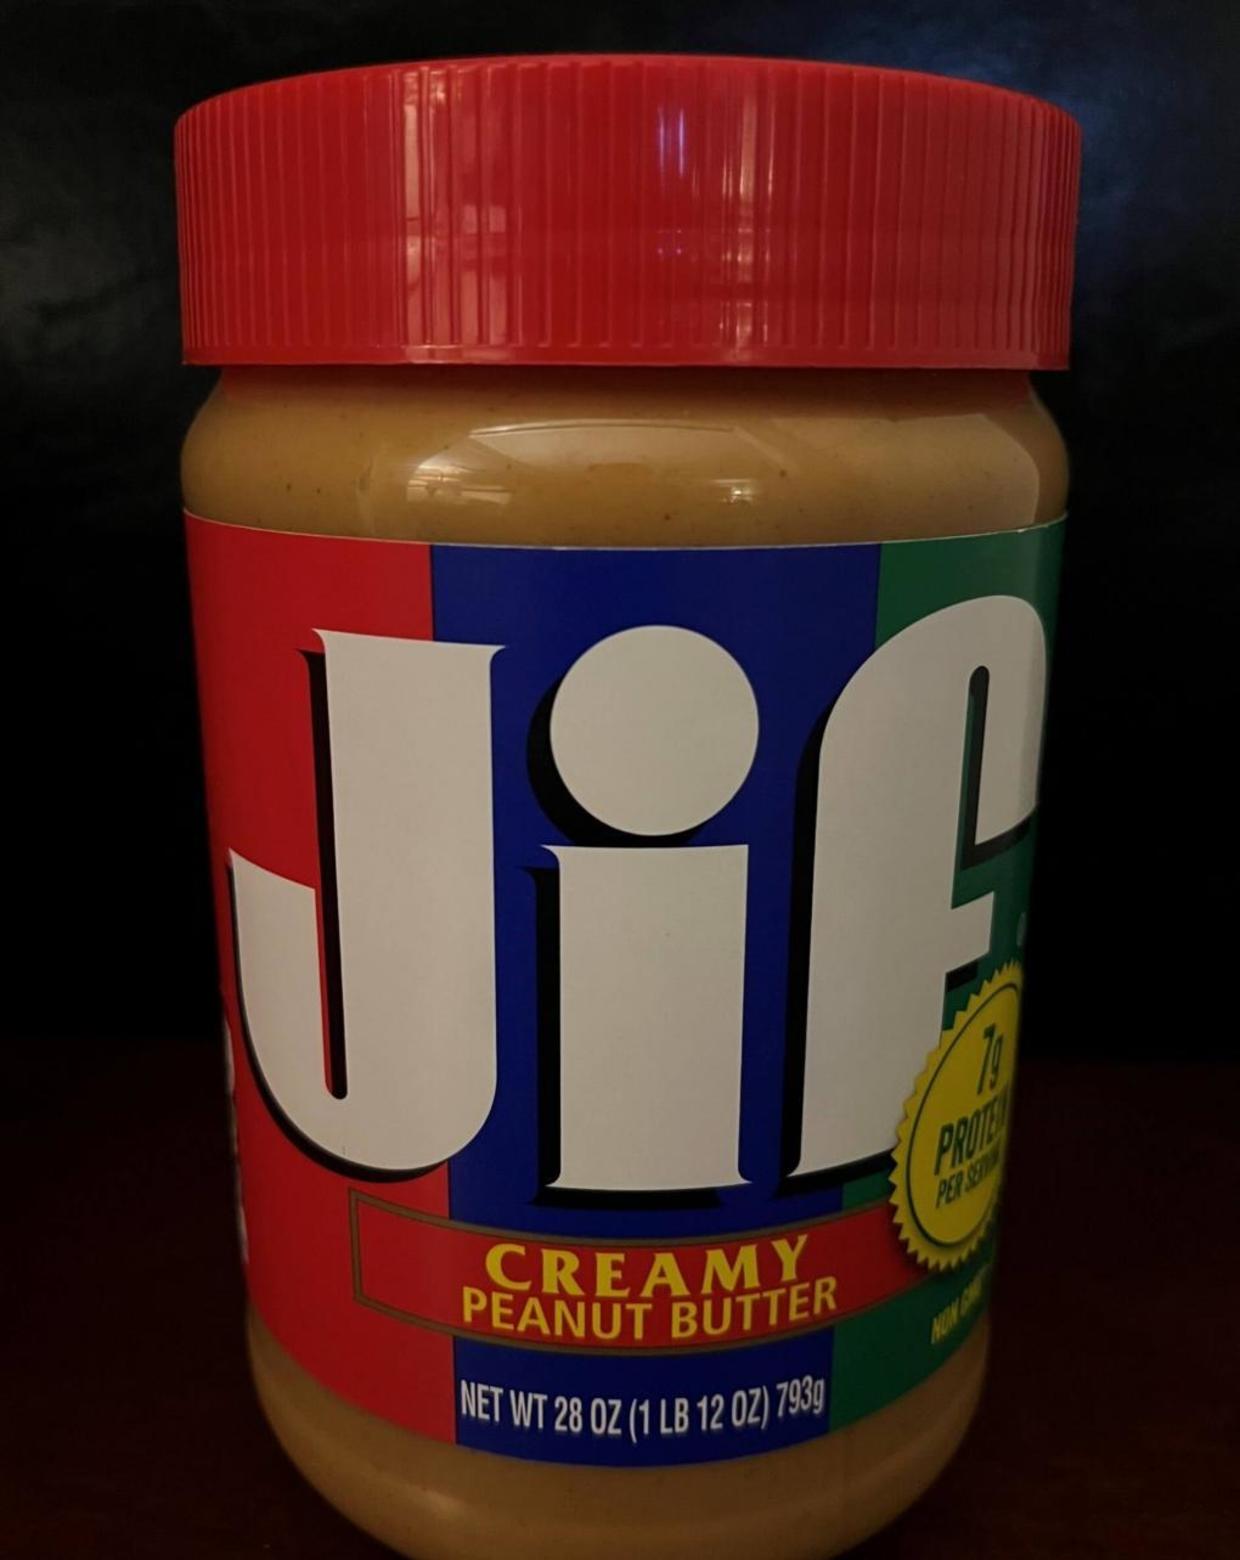 Recalled Jif Peanut Butter